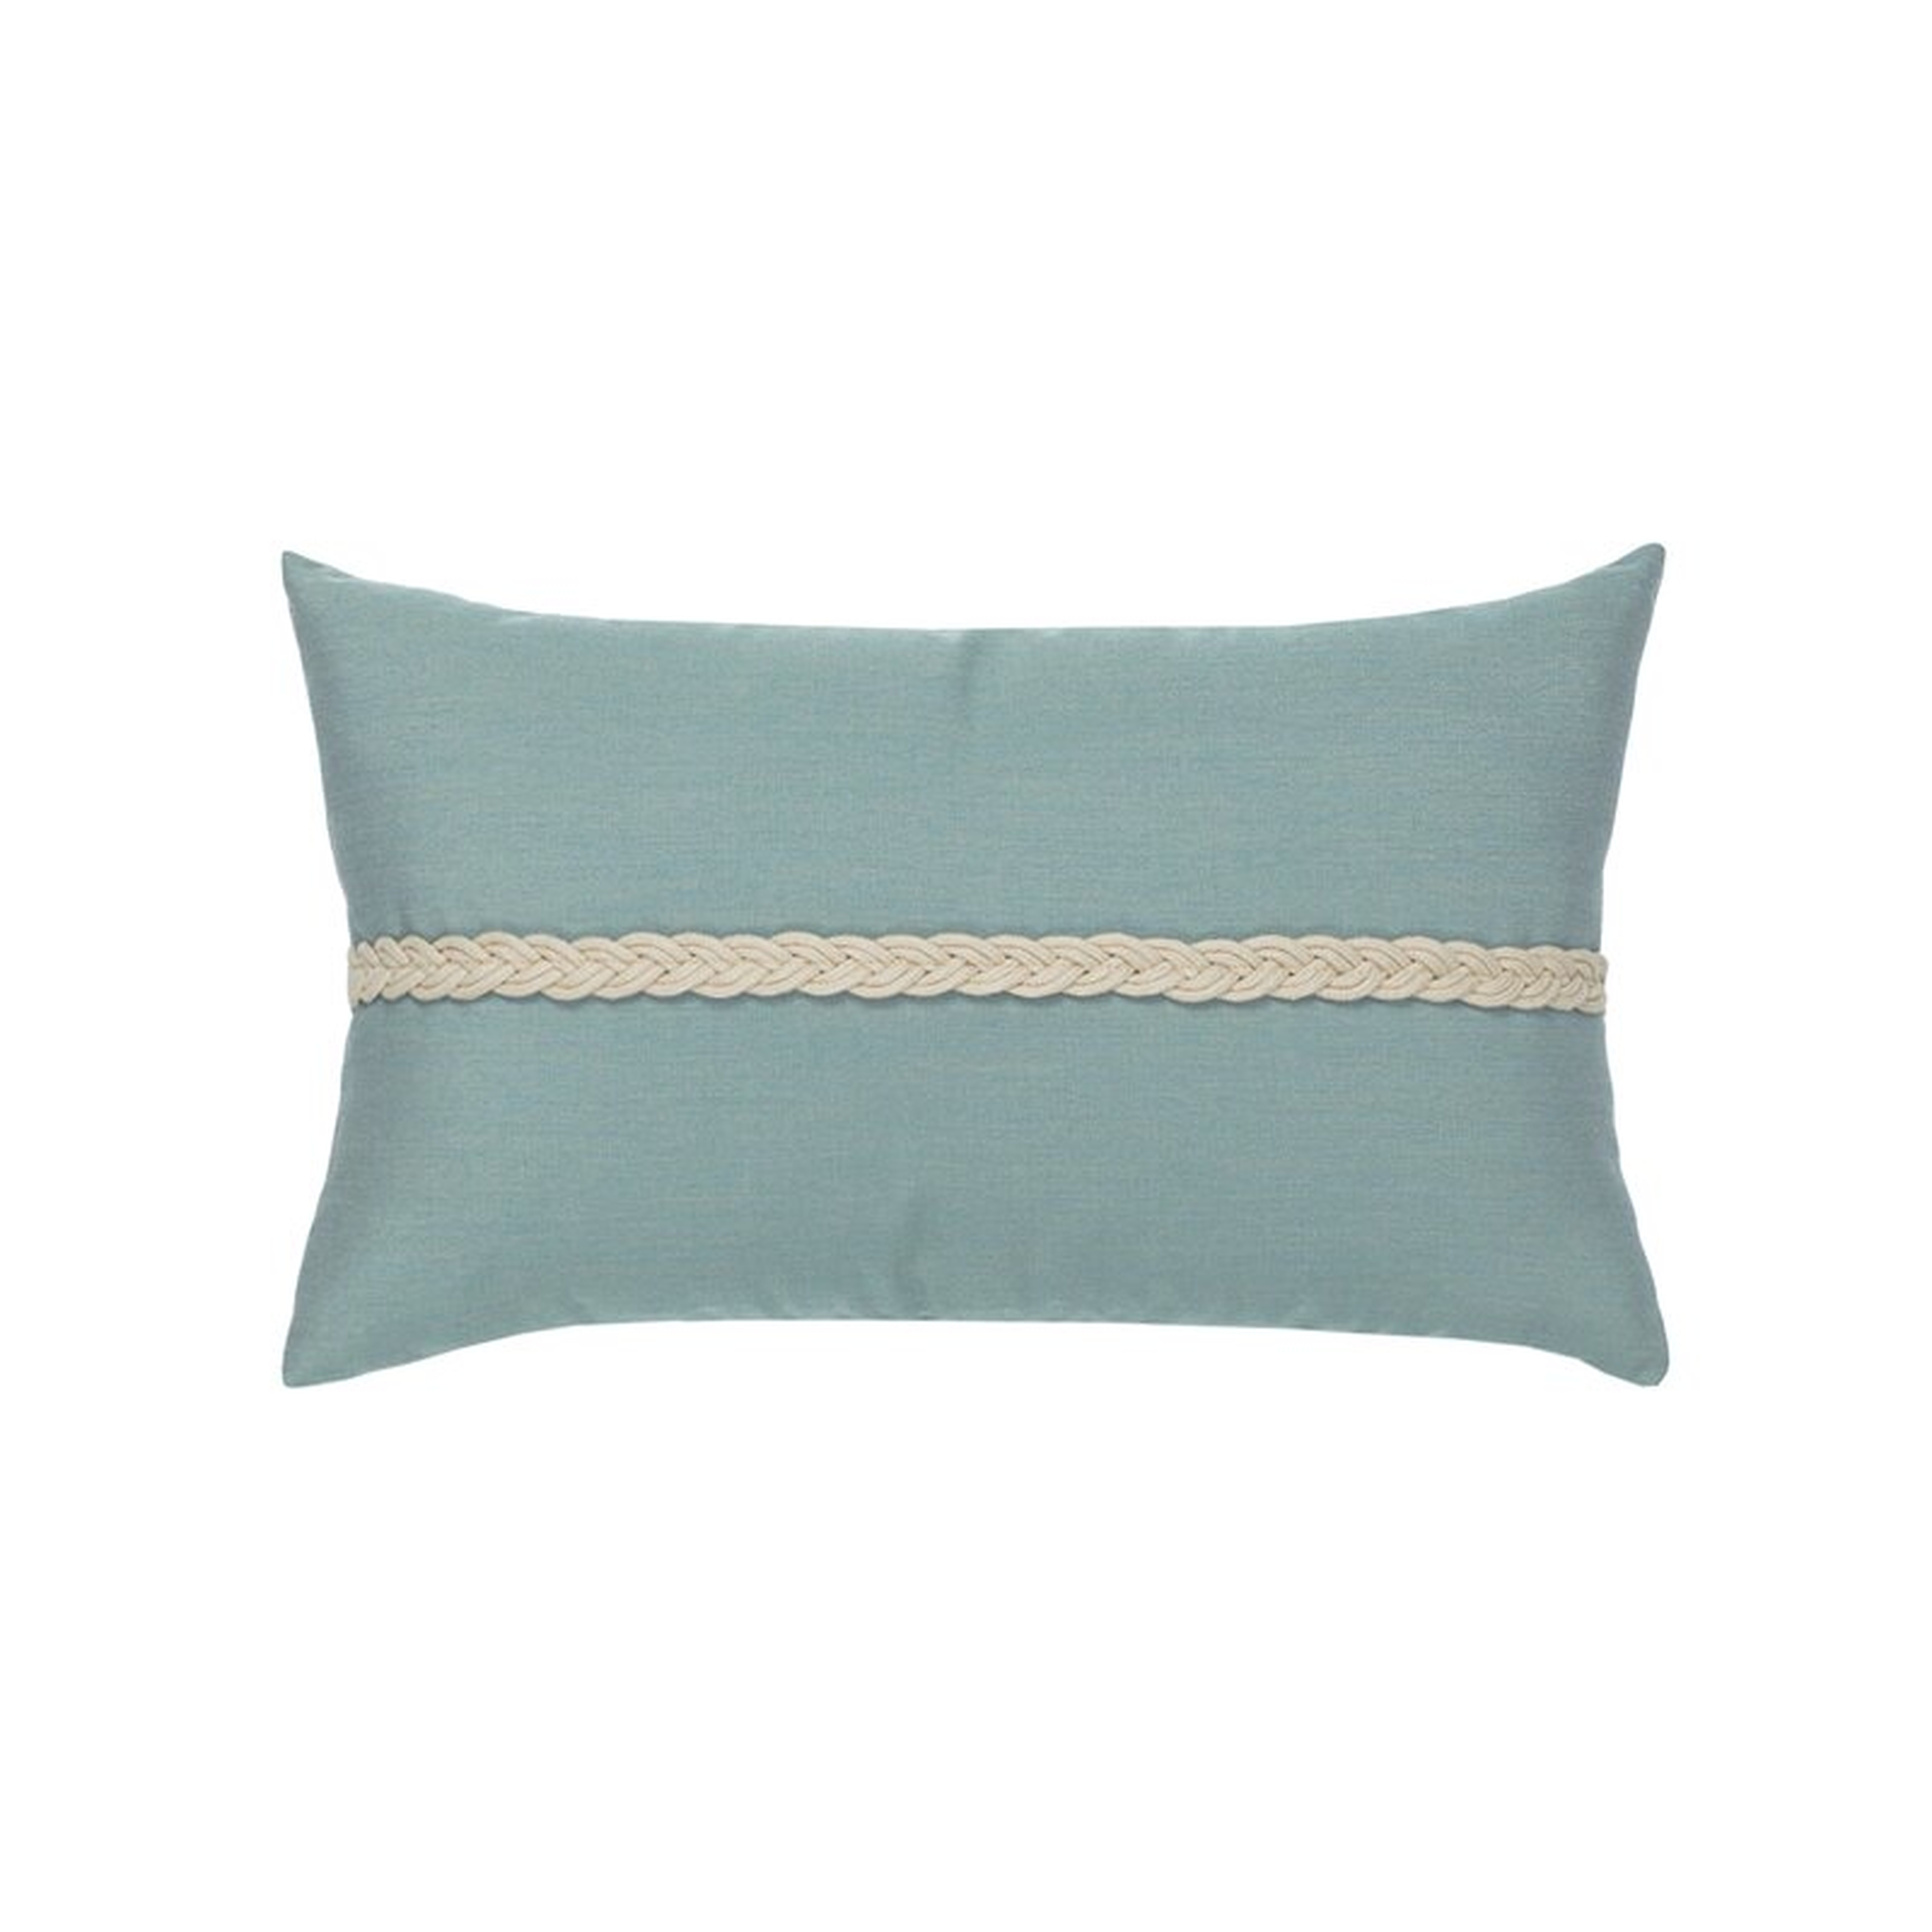 Elaine Smith Spa Braided Indoor/Outdoor Lumbar Pillow Color: Blue - Perigold